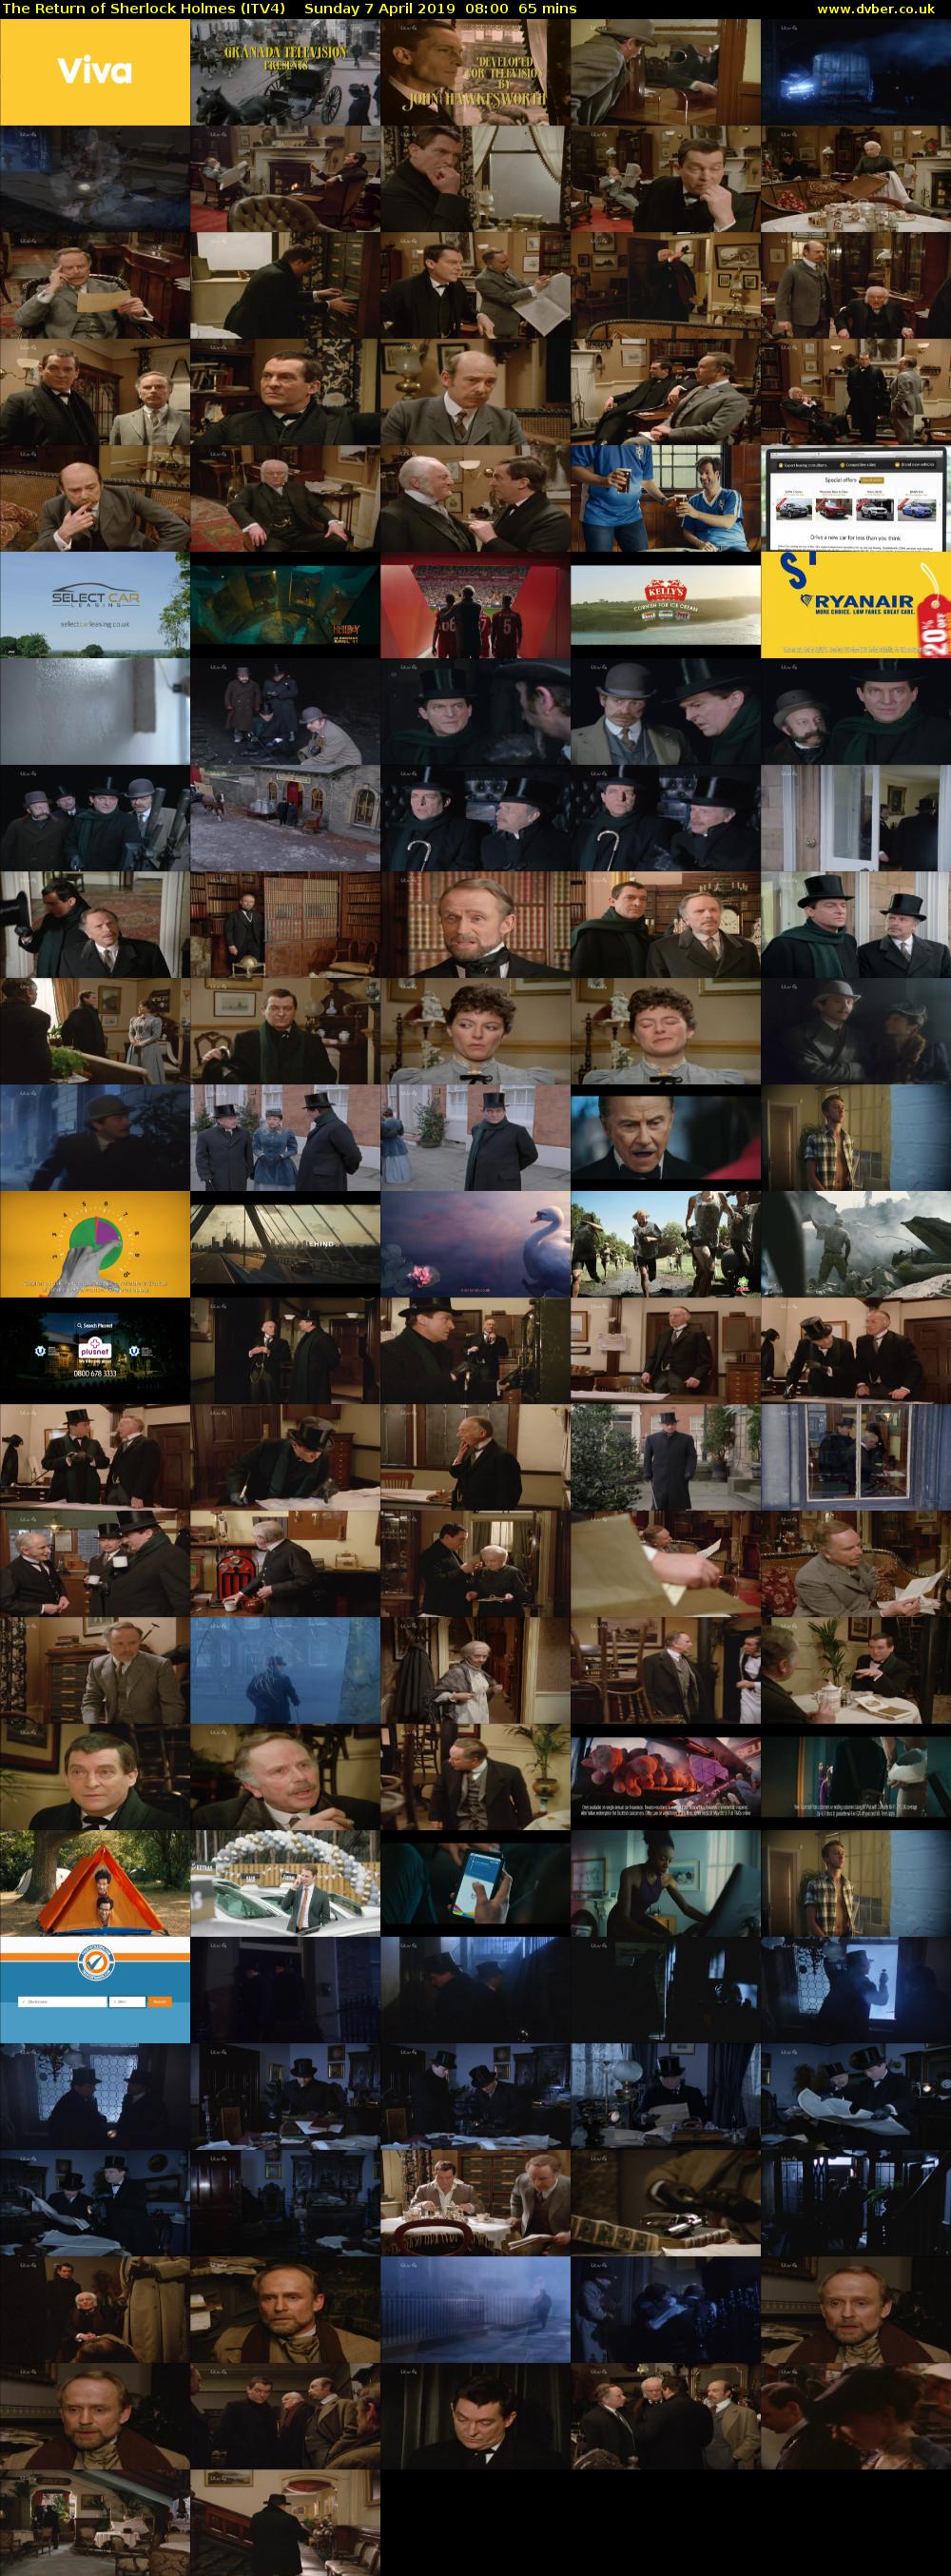 The Return of Sherlock Holmes (ITV4) Sunday 7 April 2019 08:00 - 09:05